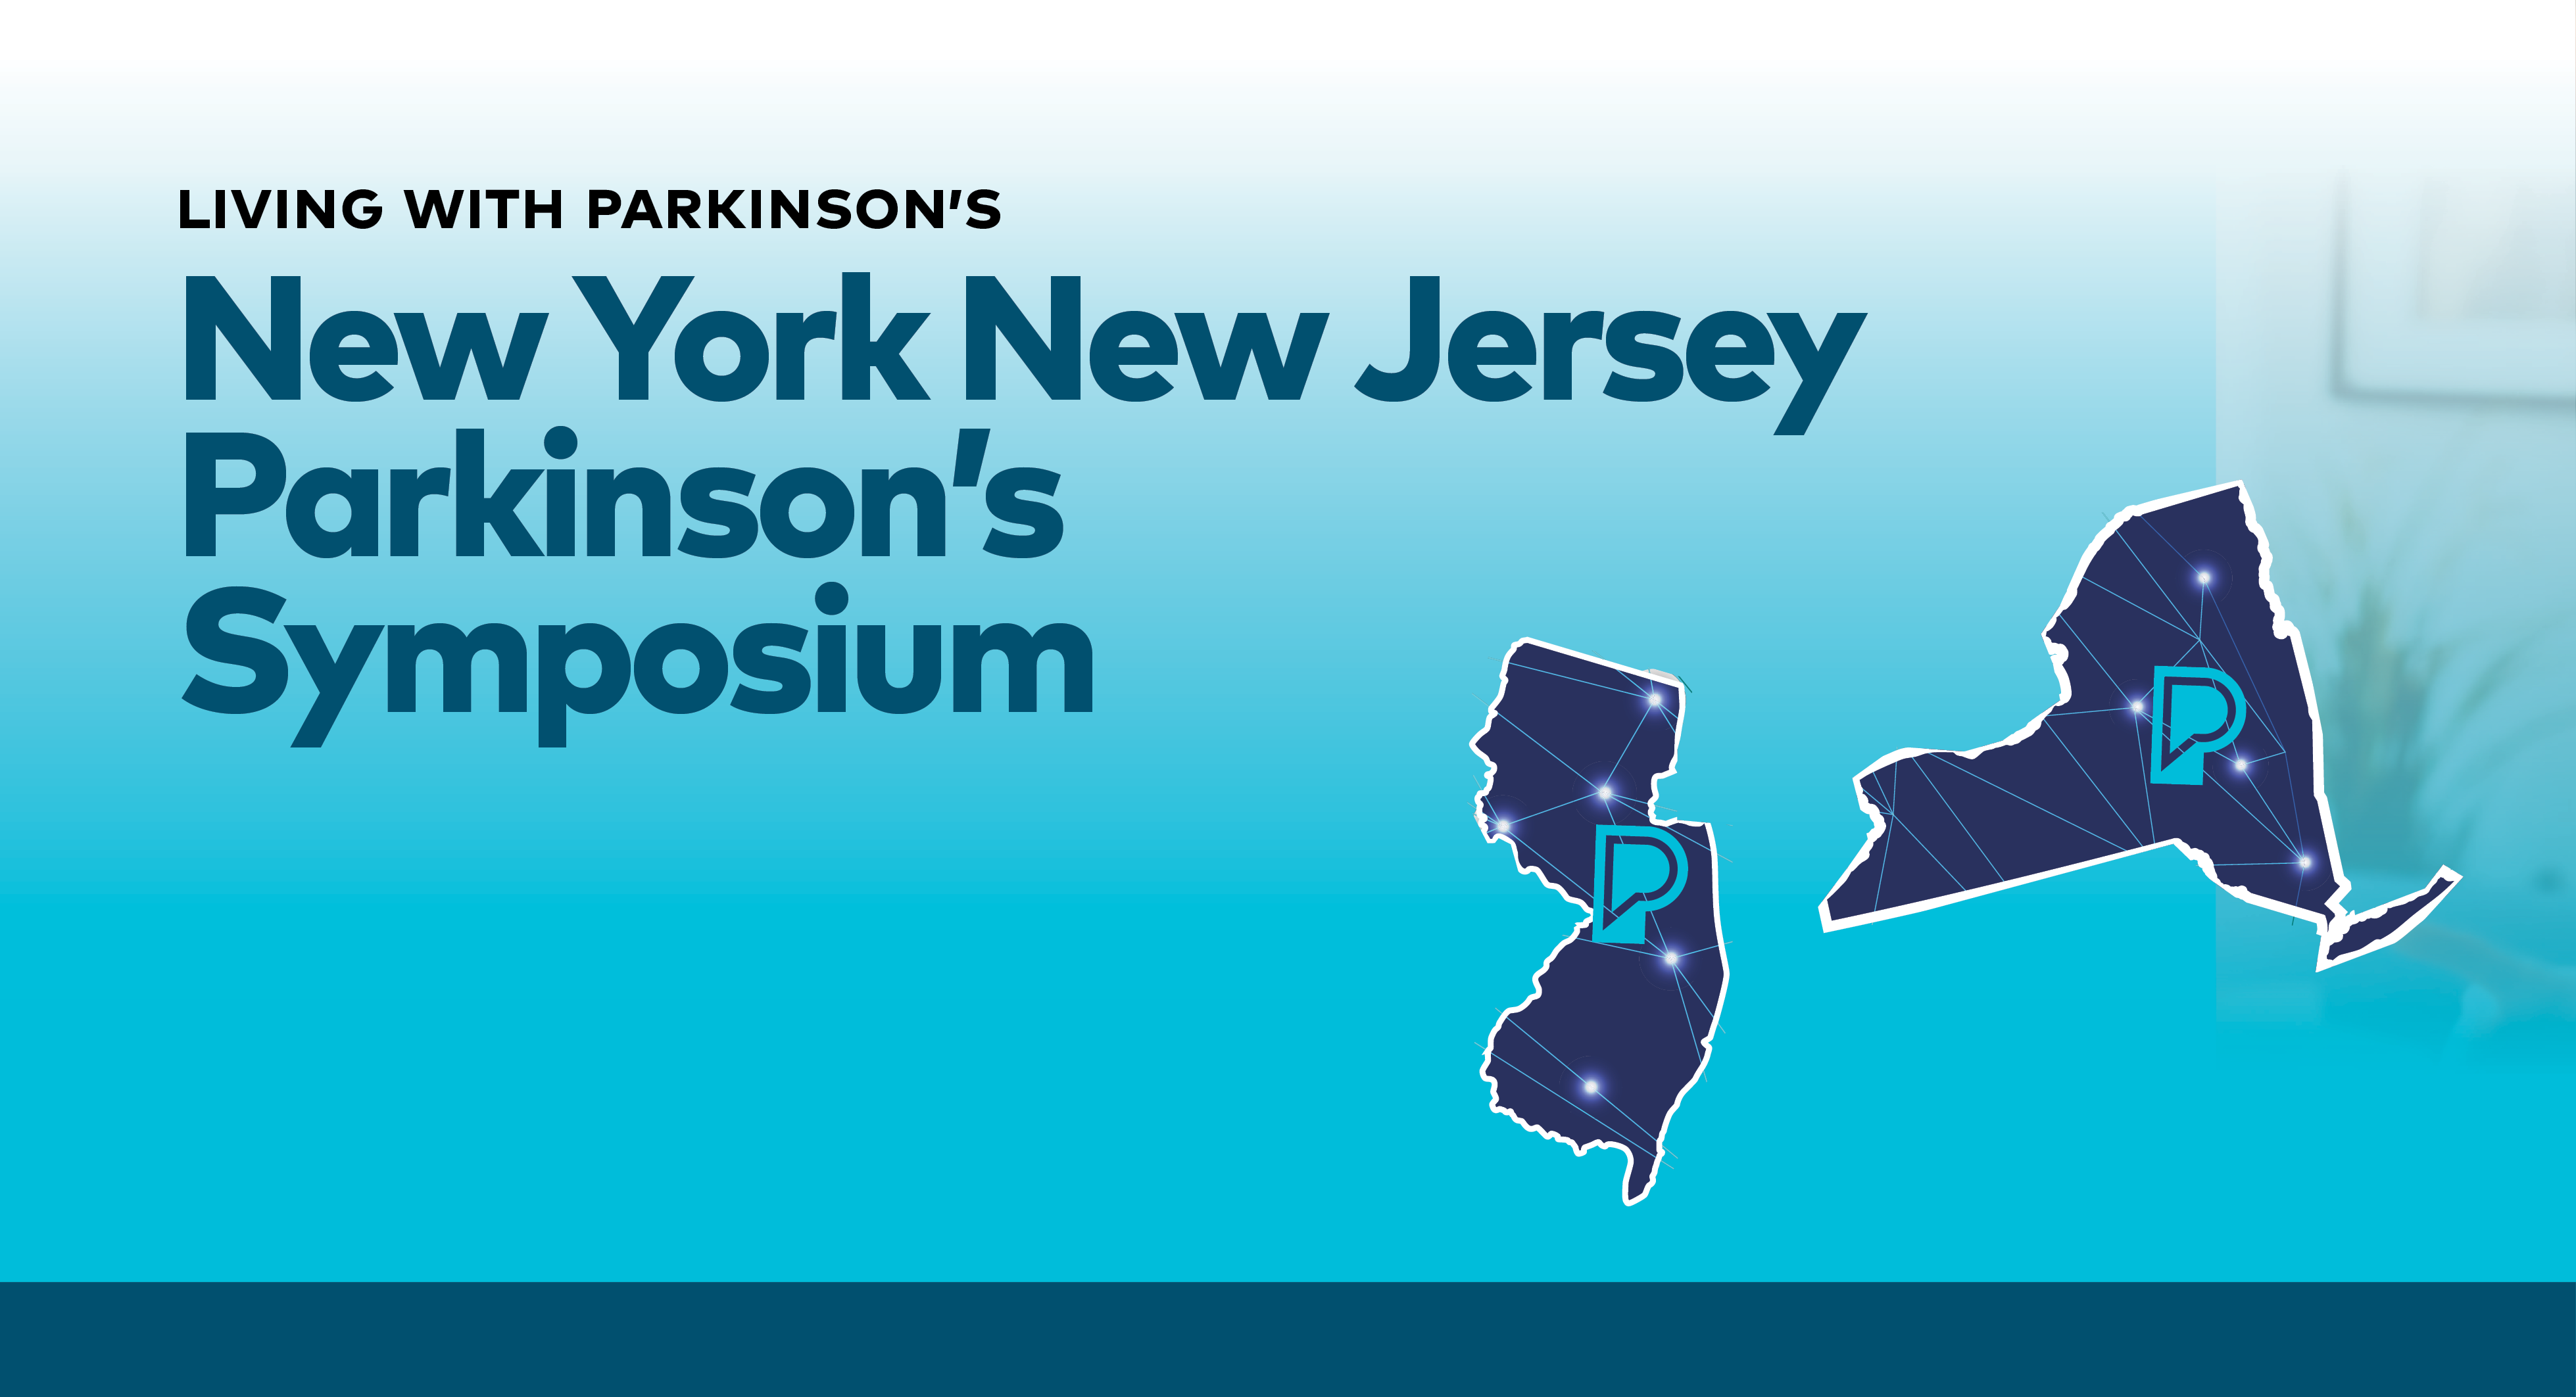 New York New Jersey Parkinson's Symposium